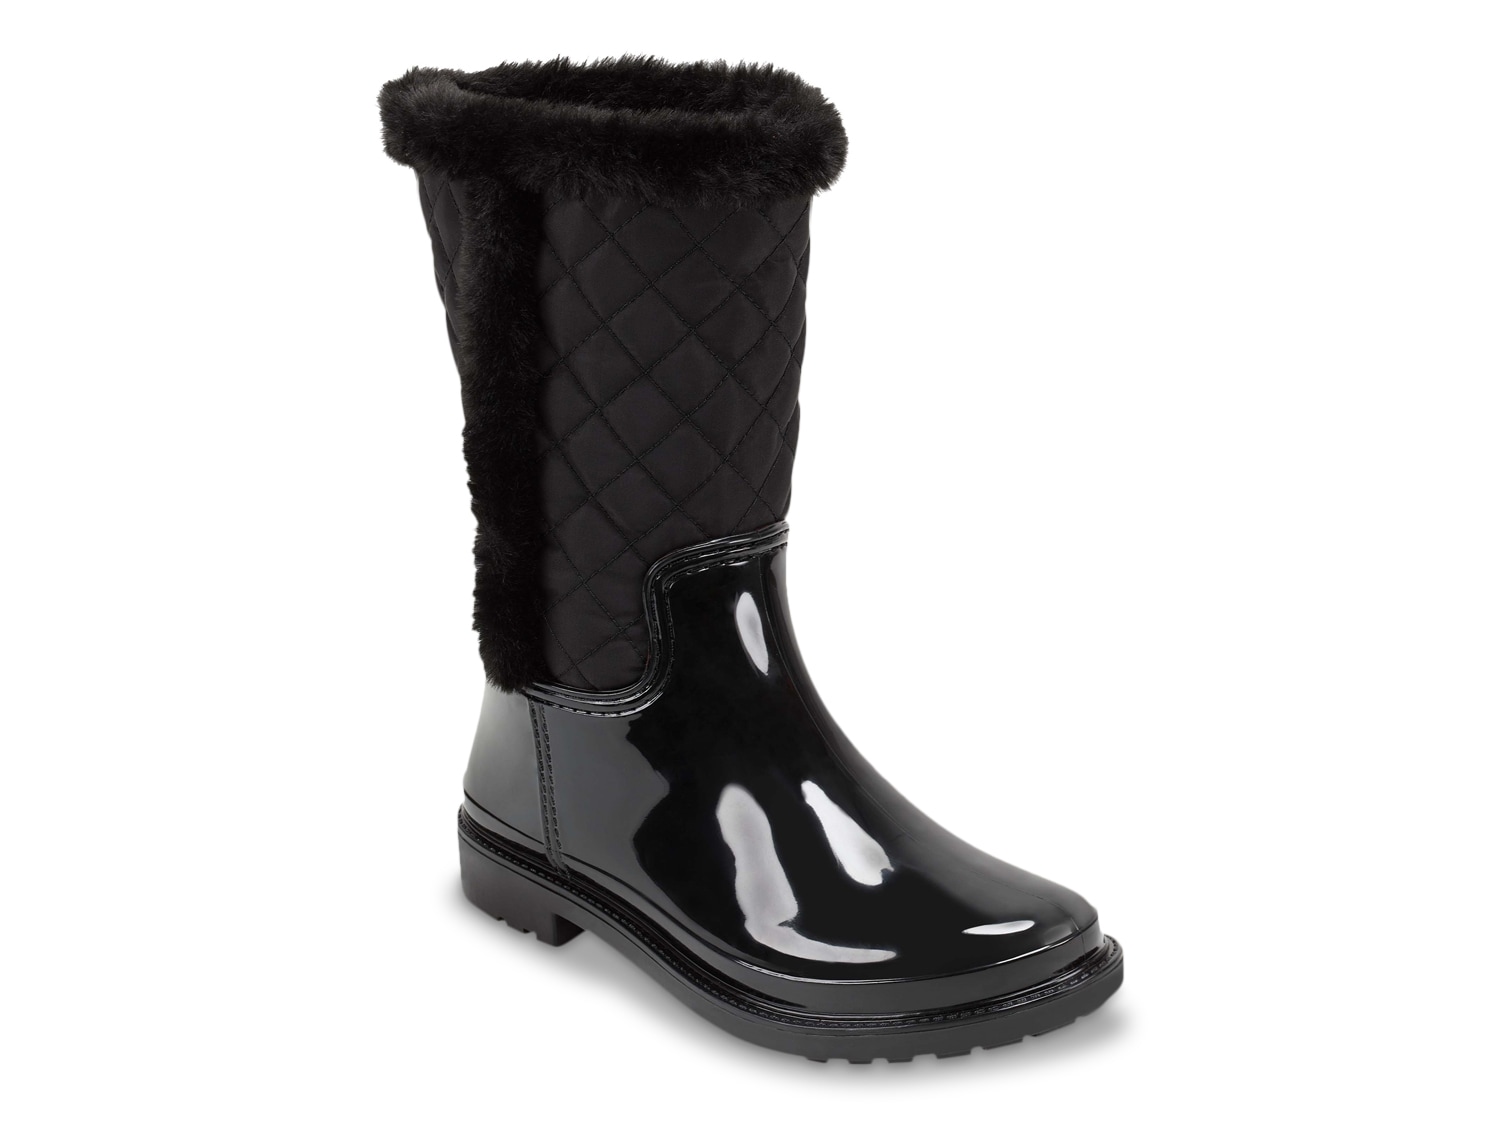 tommy hilfiger women's ravel2 rain boot